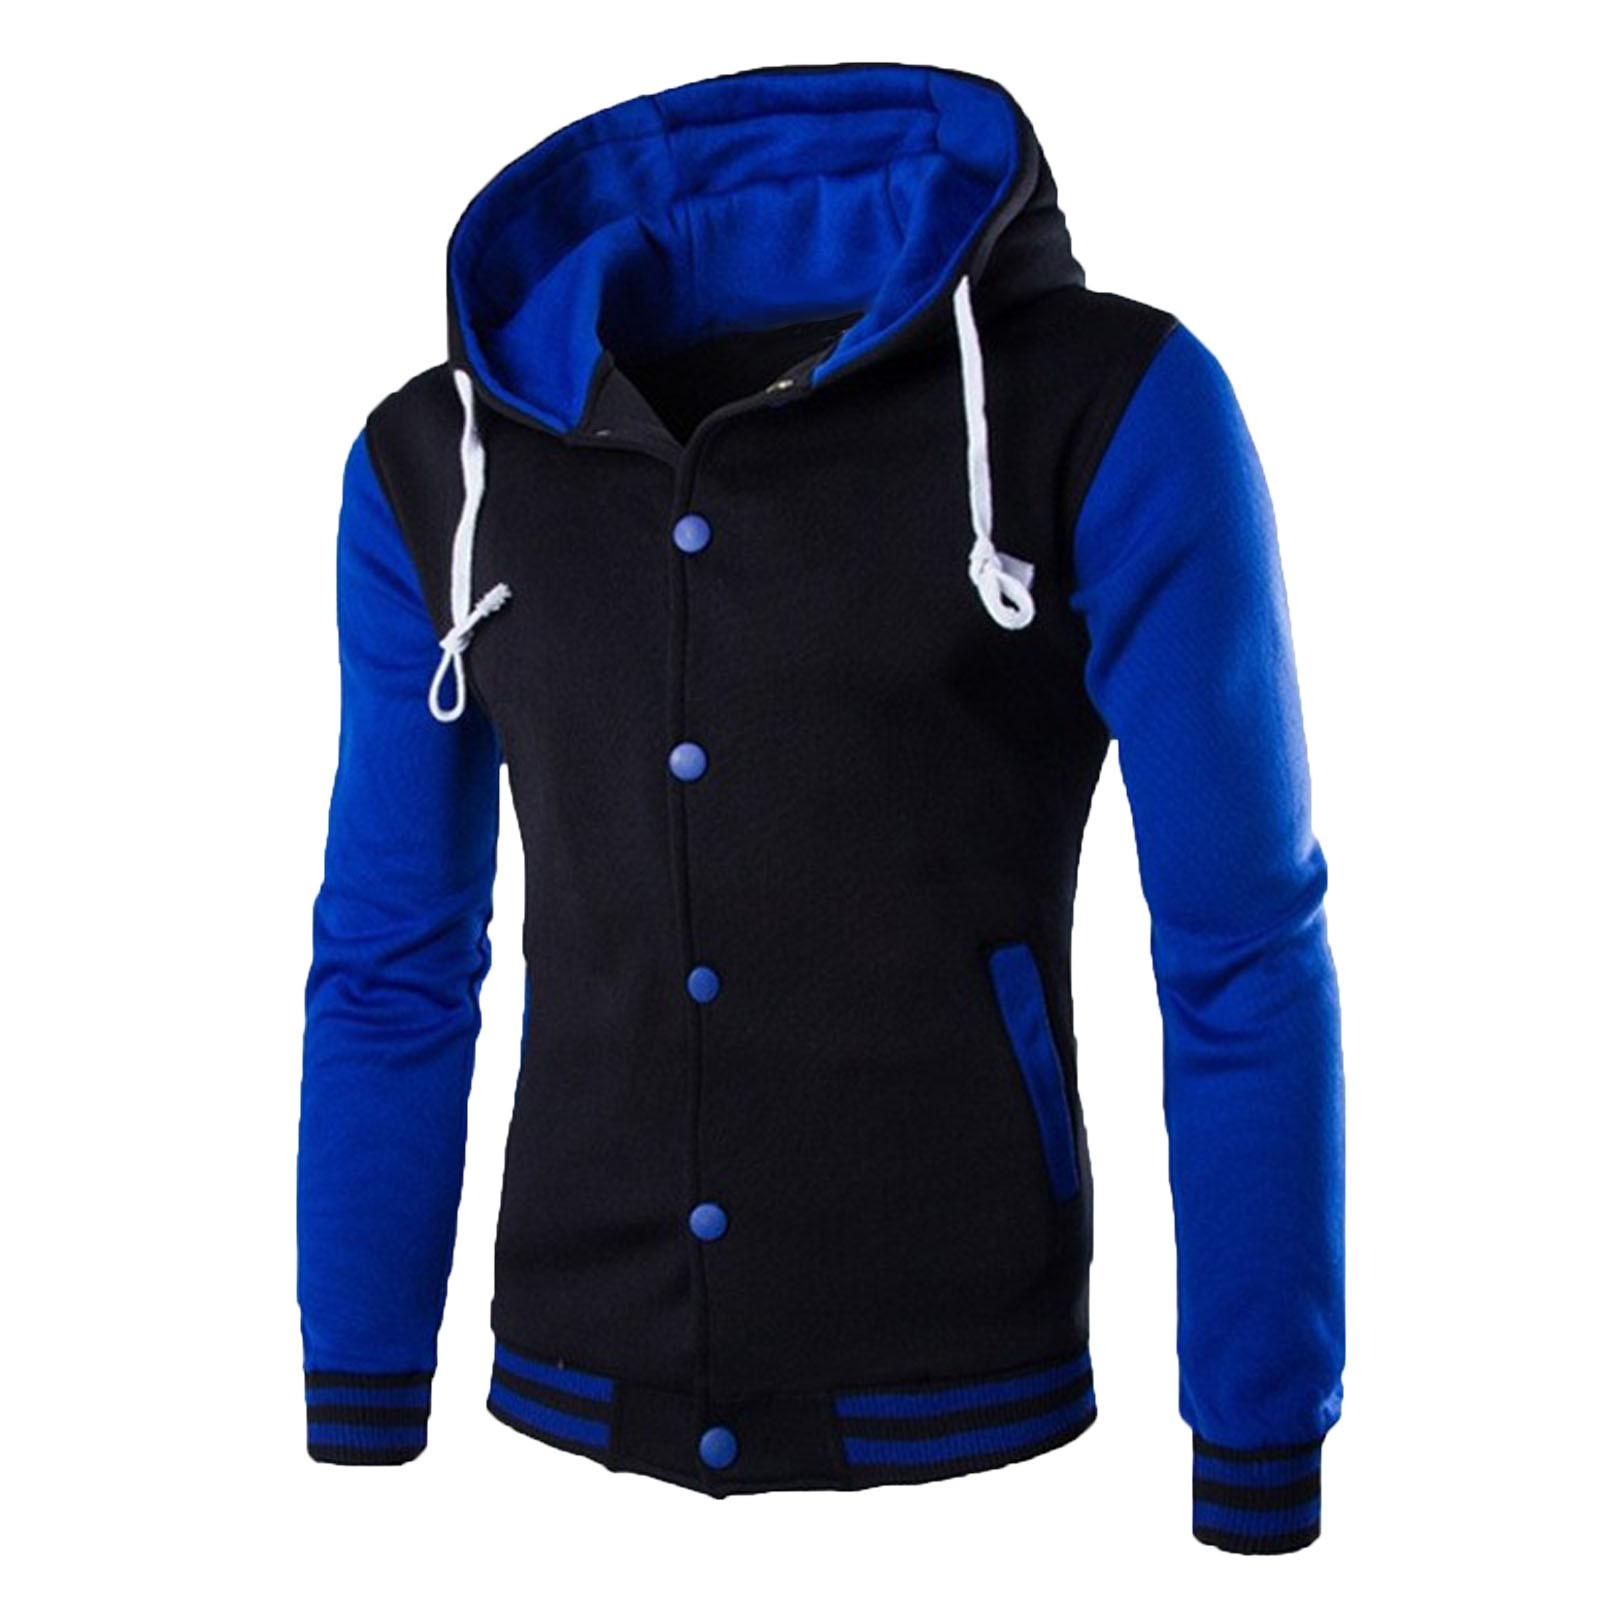 tklpehg Mens Coat Long Sleeve Coat Trendy Fashion Casual Jacket Outdoor Single-breasted Jacket Tooling Baseball Uniform Jacket Blue XL - image 1 of 4